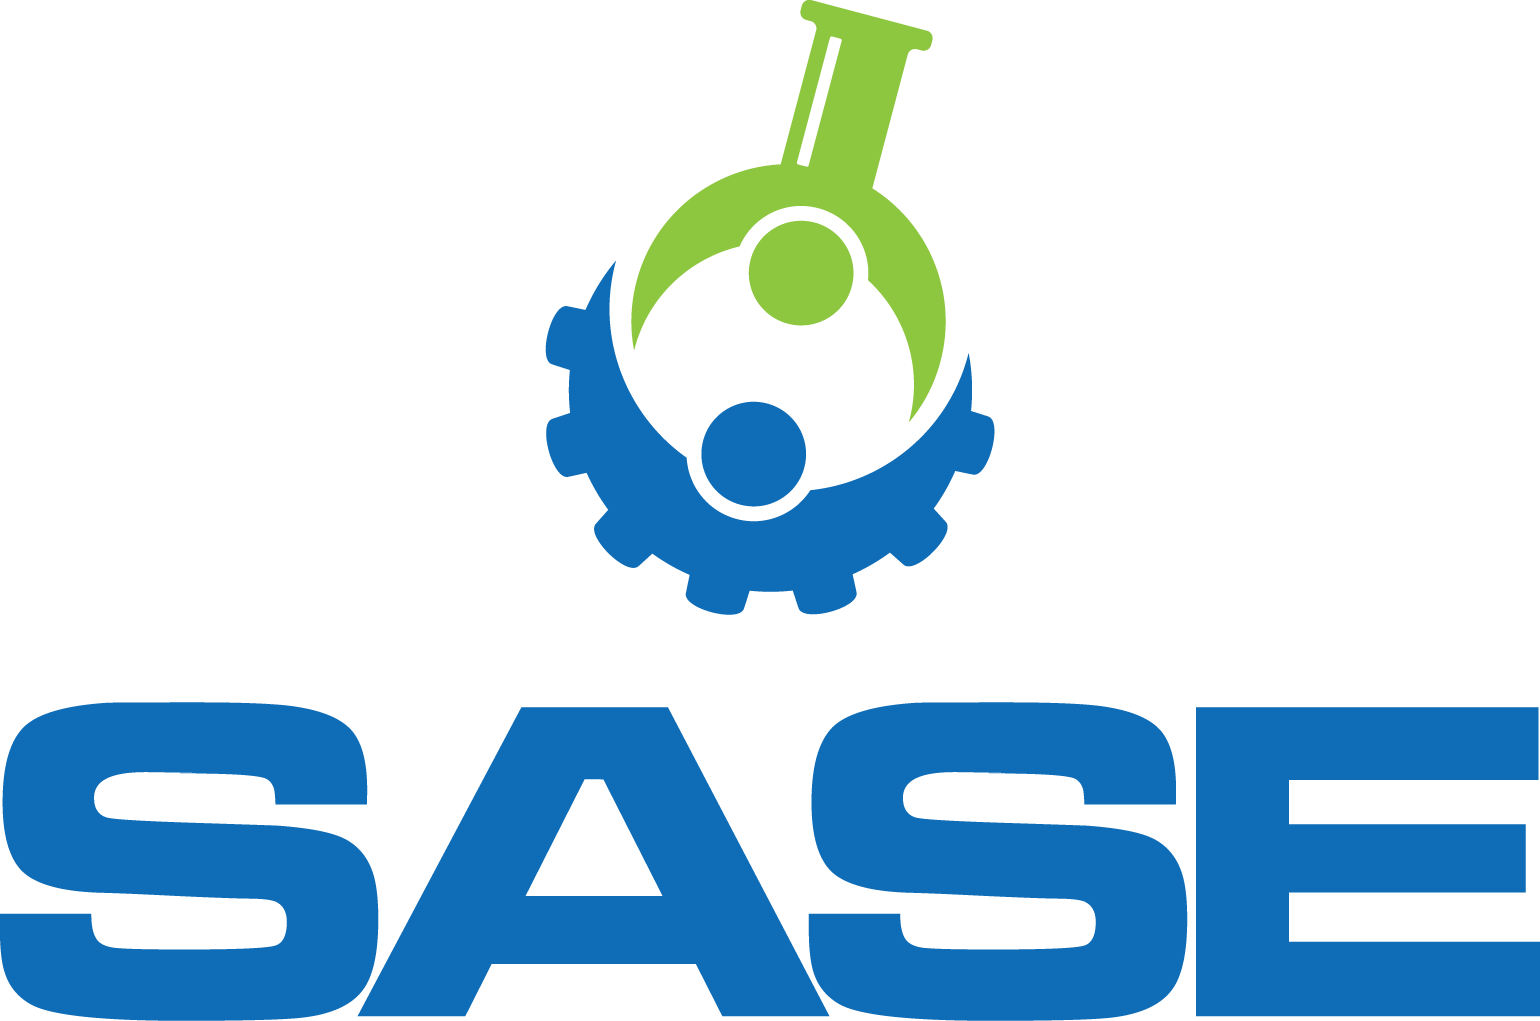 SASE colored logo